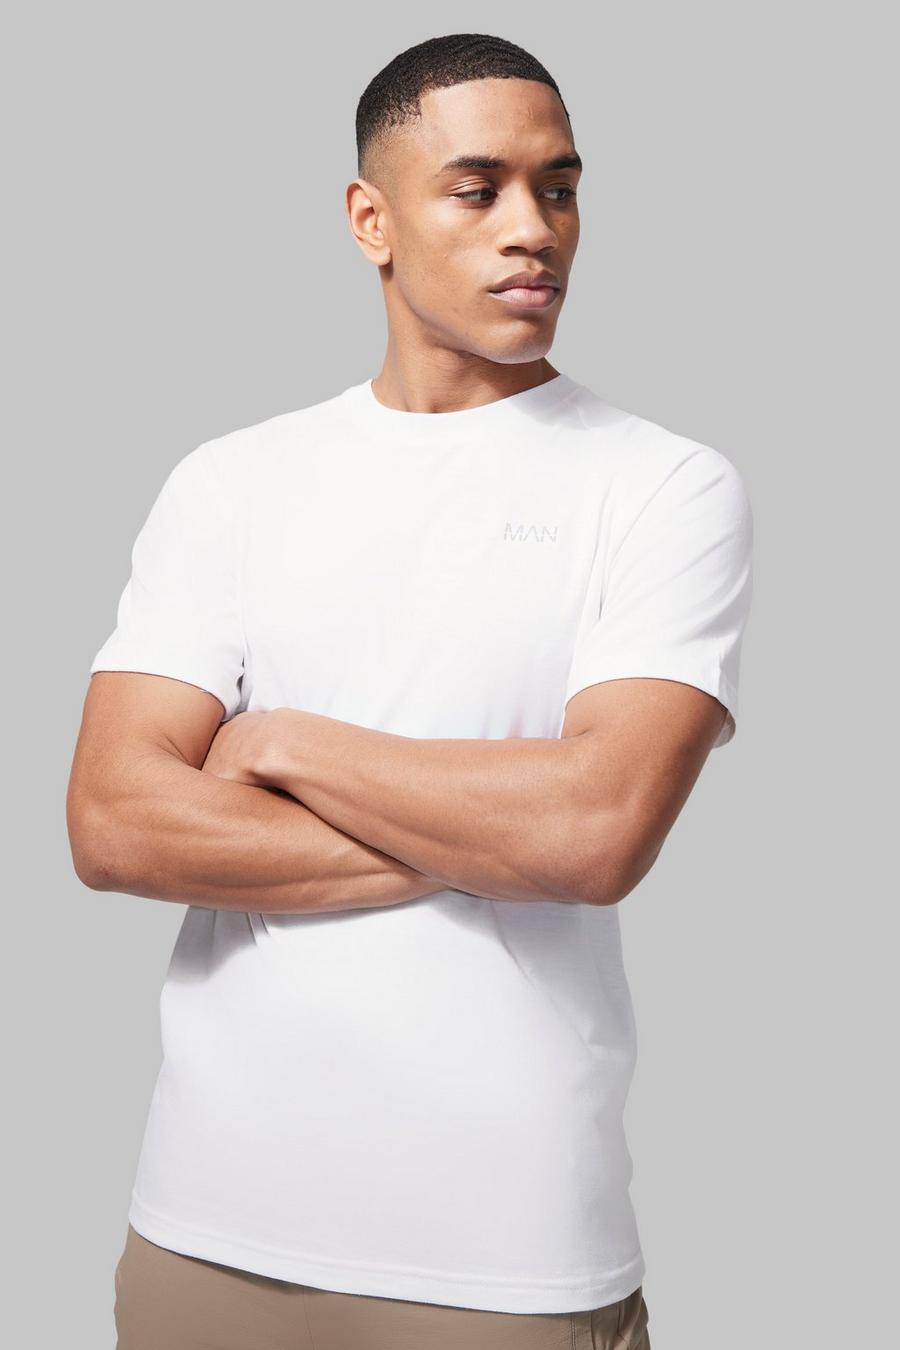 White vit Man Active Gym Raglan T-shirt